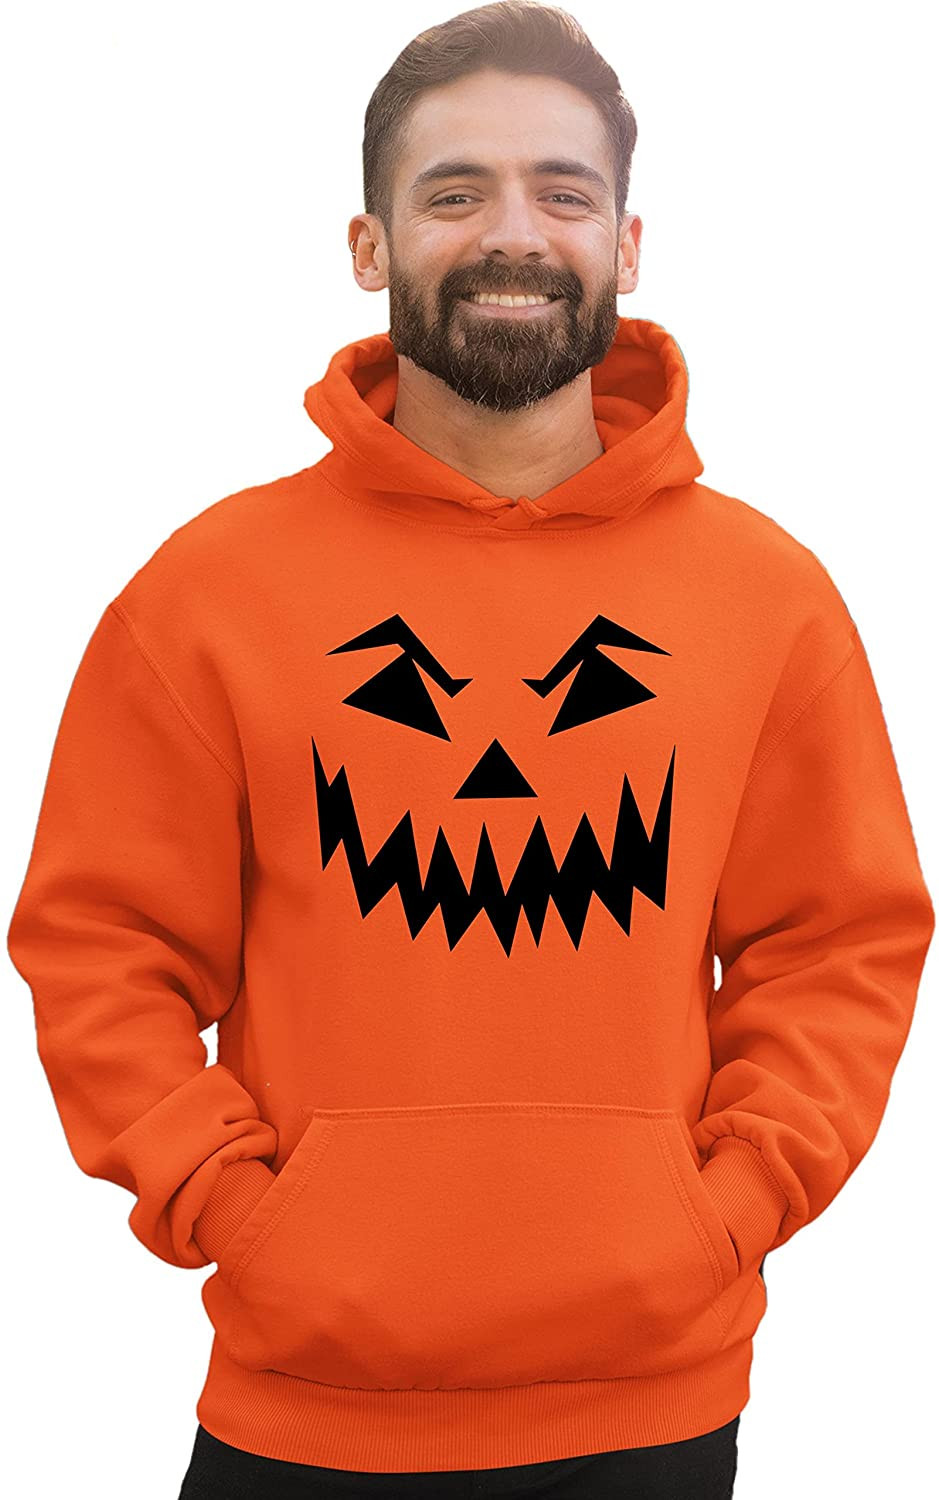 And Scary Pumpkin Jack O' Lantern Halloween Sweat T-Shirt